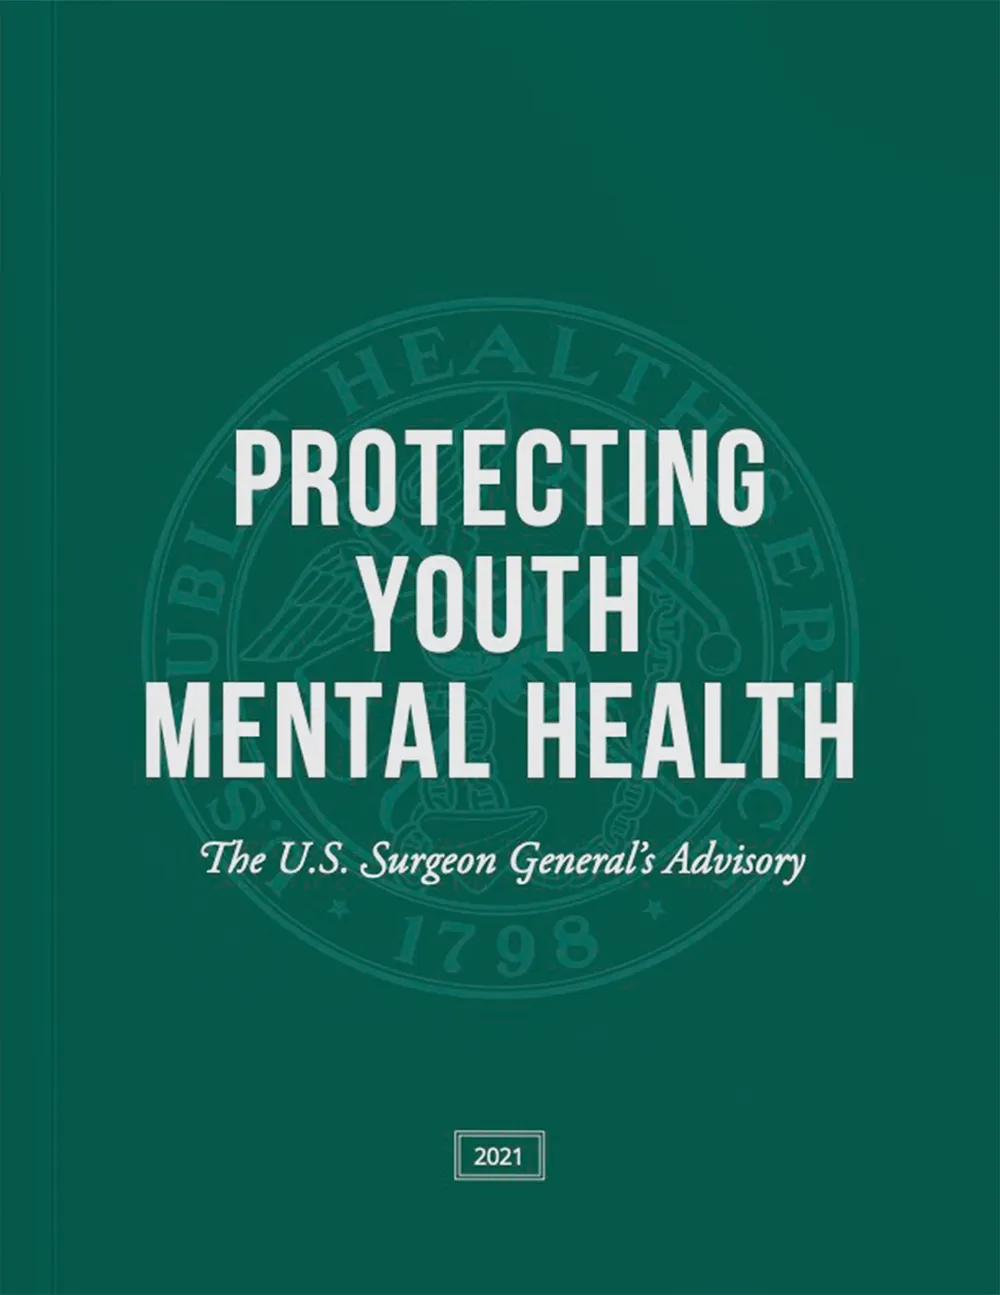 The Youth Mental Health advisory cover sheet, titled Protecting Youth Mental Health, The U.S Surgeon General's Advisory